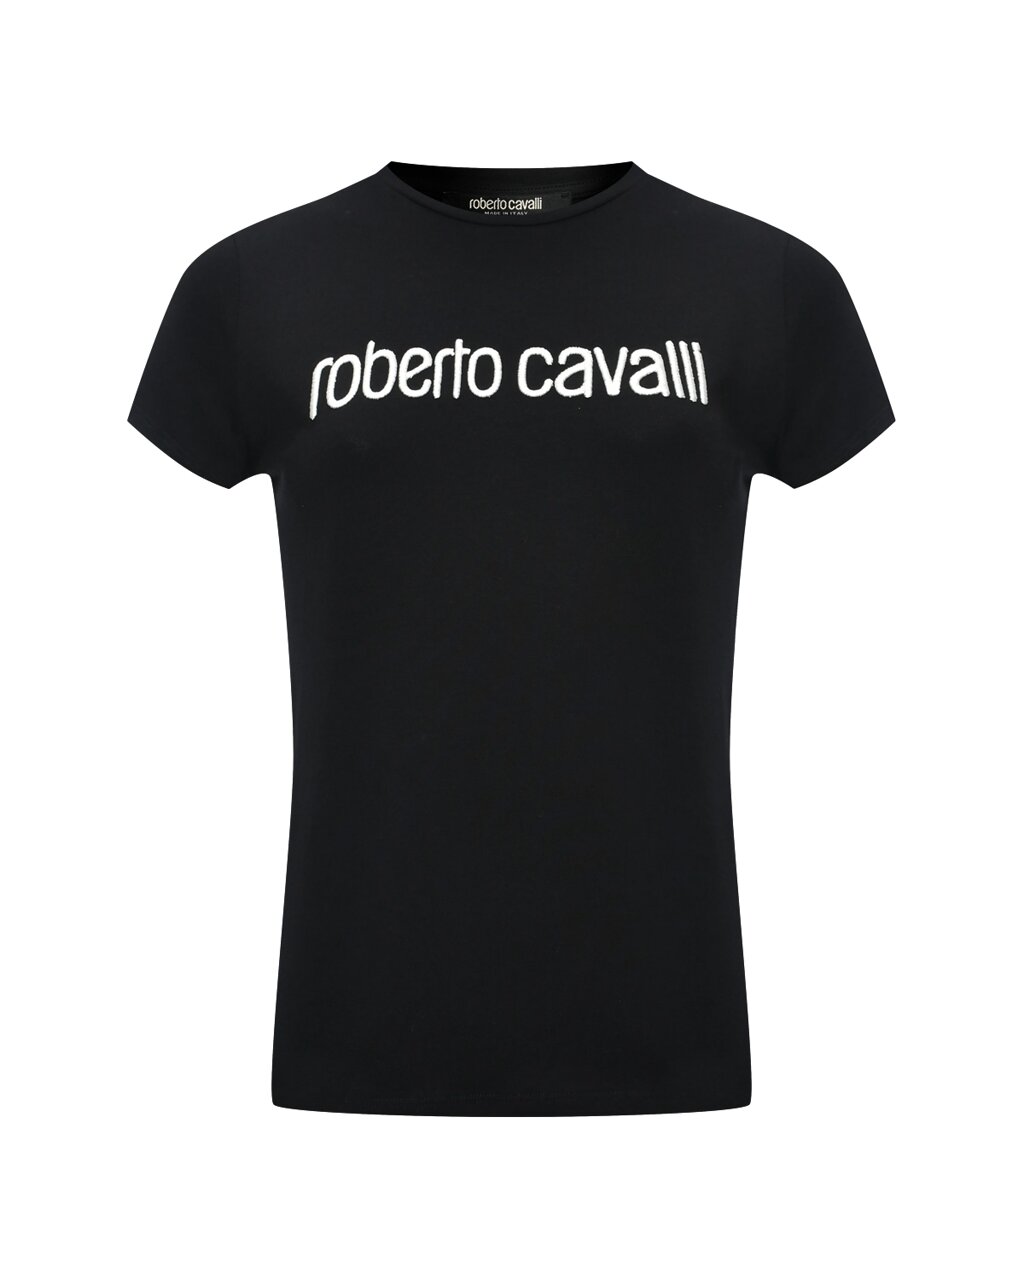 Футболка базовая, лого на груди Roberto Cavalli от компании Admi - фото 1